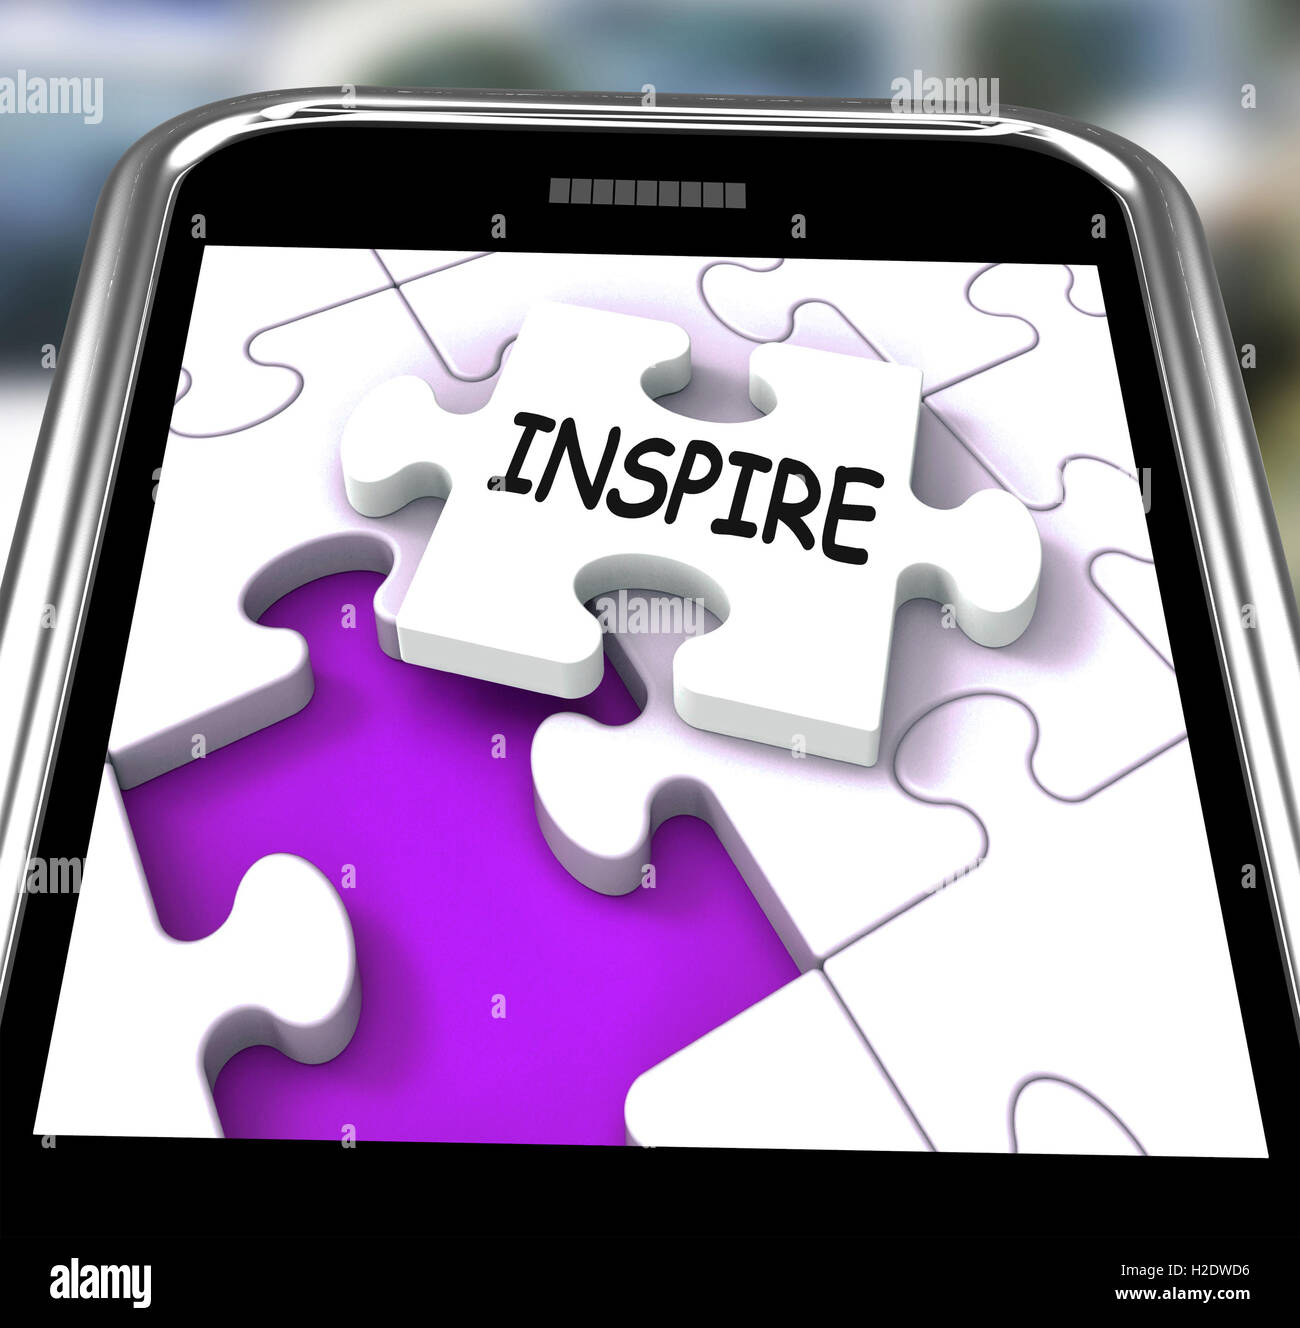 Inspire Smartphone Shows Originality Innovation And Creativity O Stock Photo